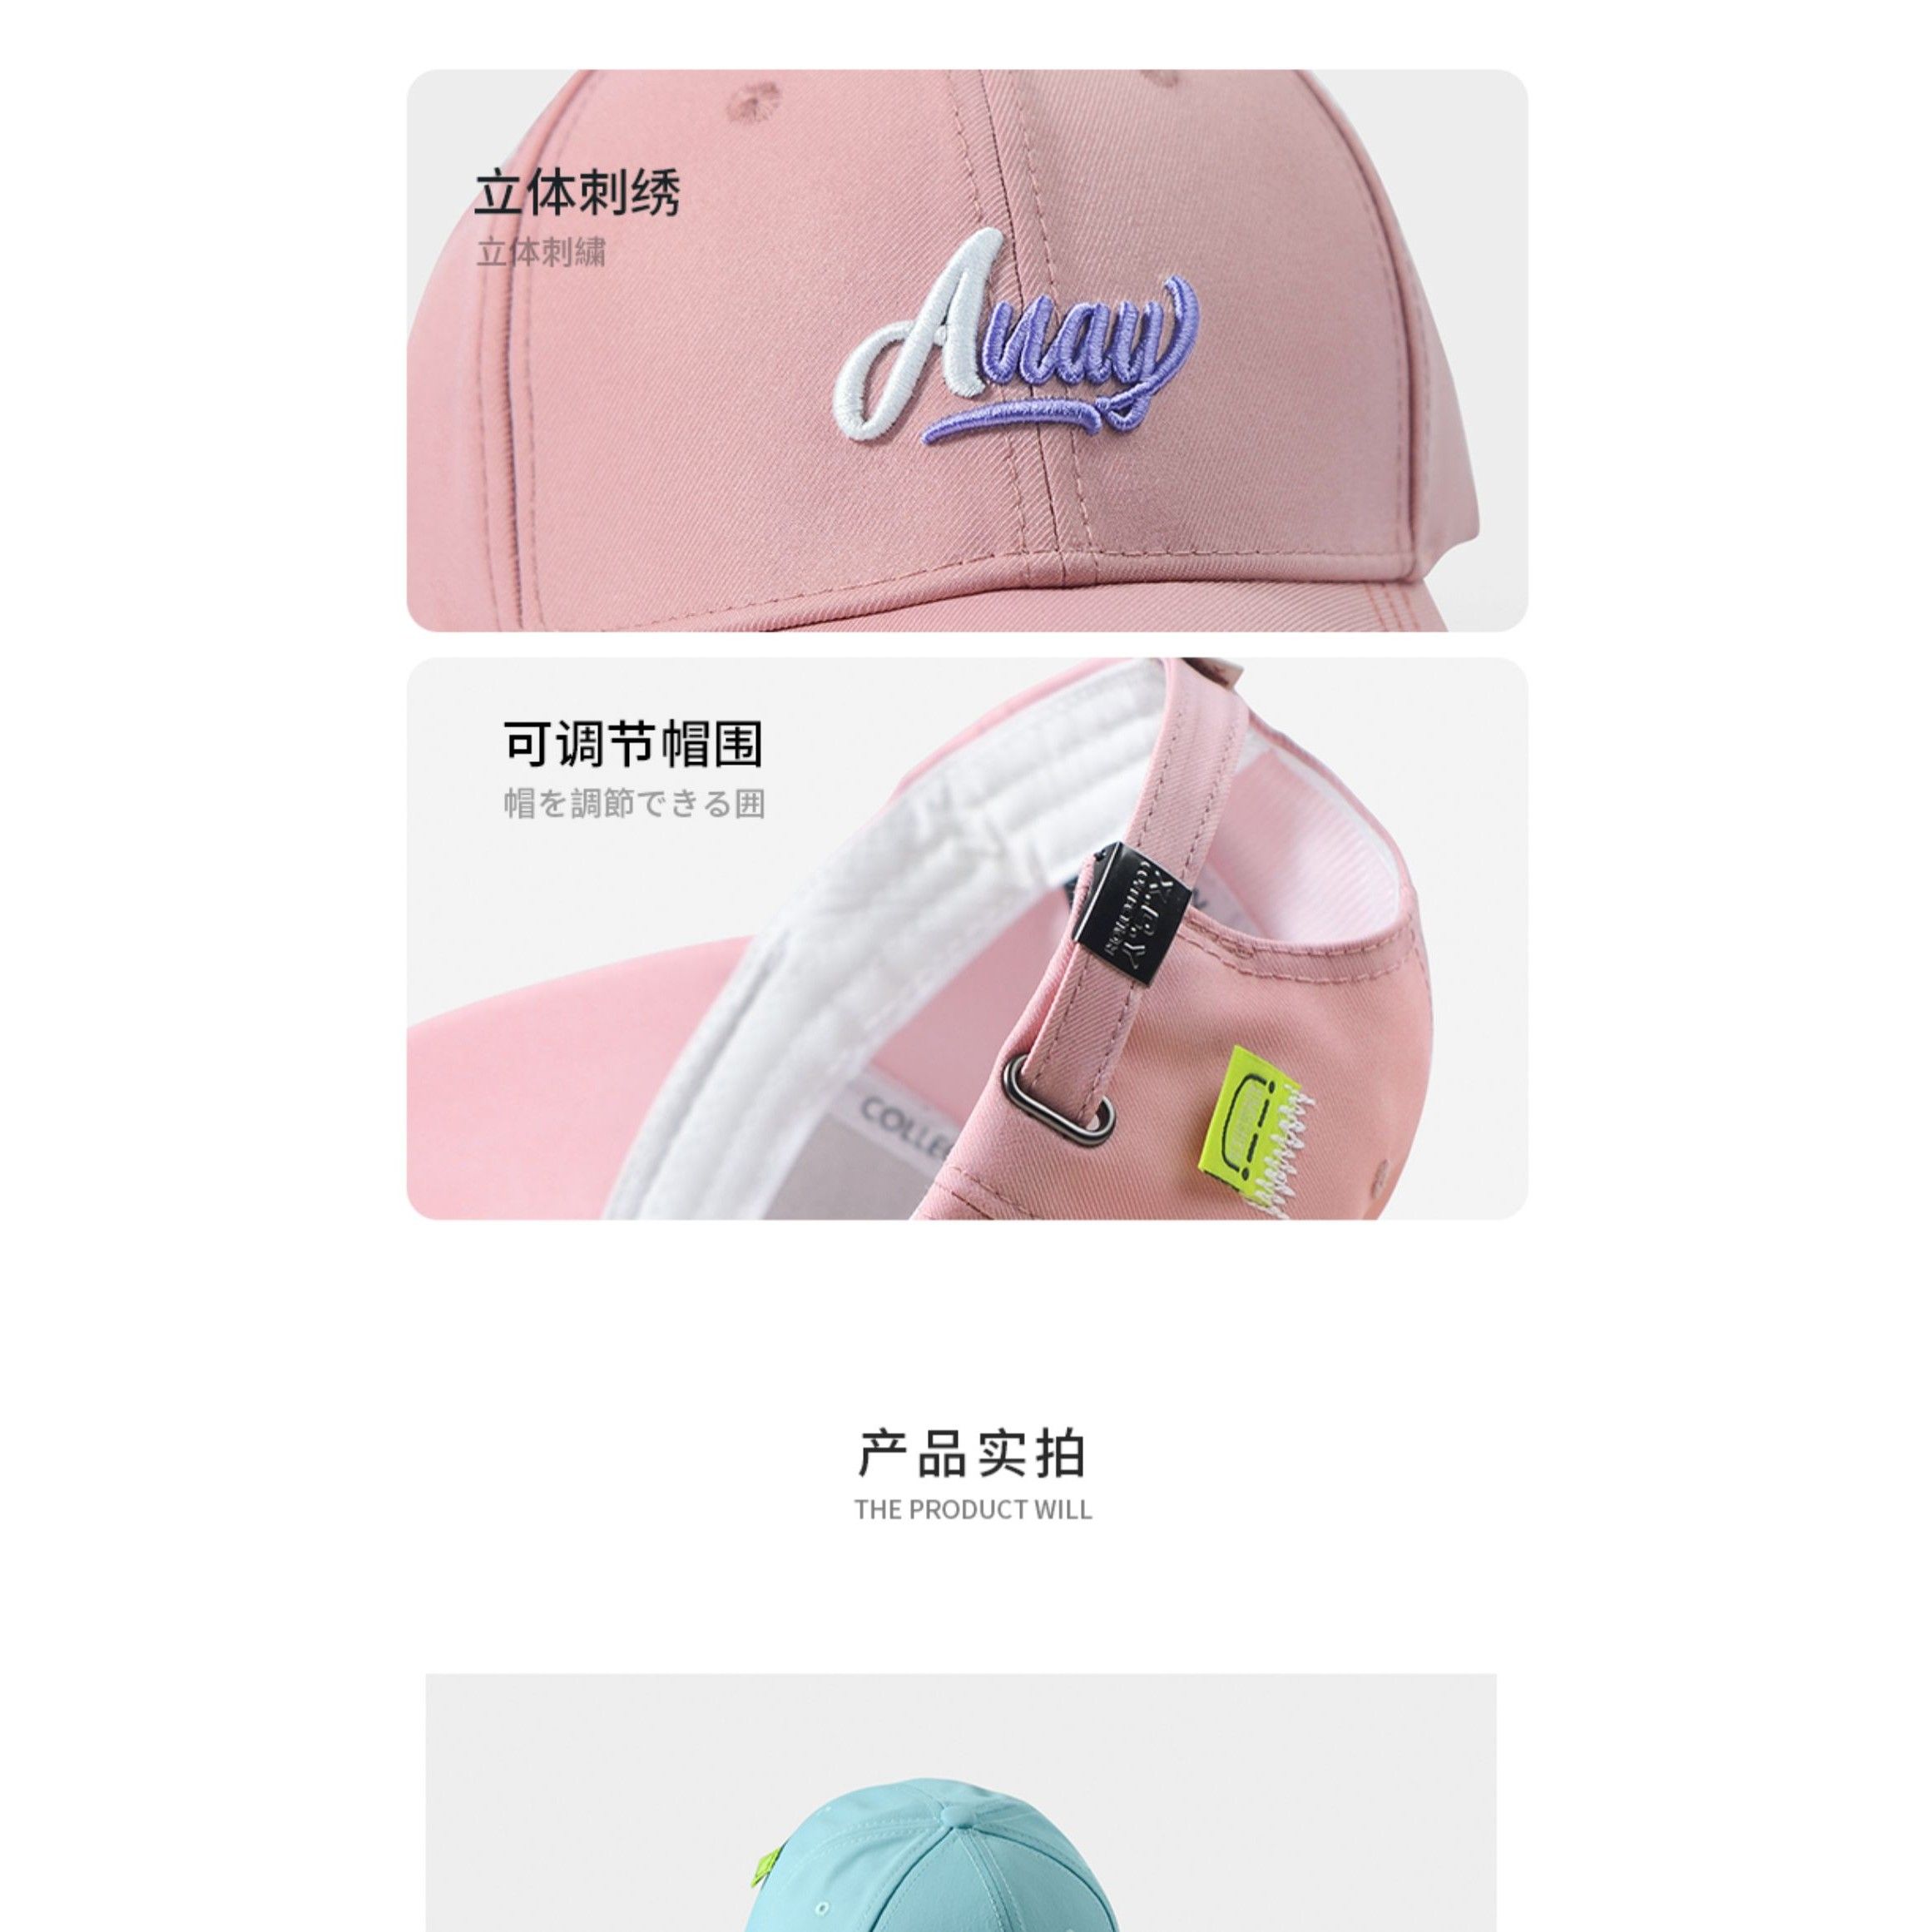 Hard top hat men and women spring and autumn peaked cap Korean version of the trendy brand sun visor casual summer pink baseball cap new